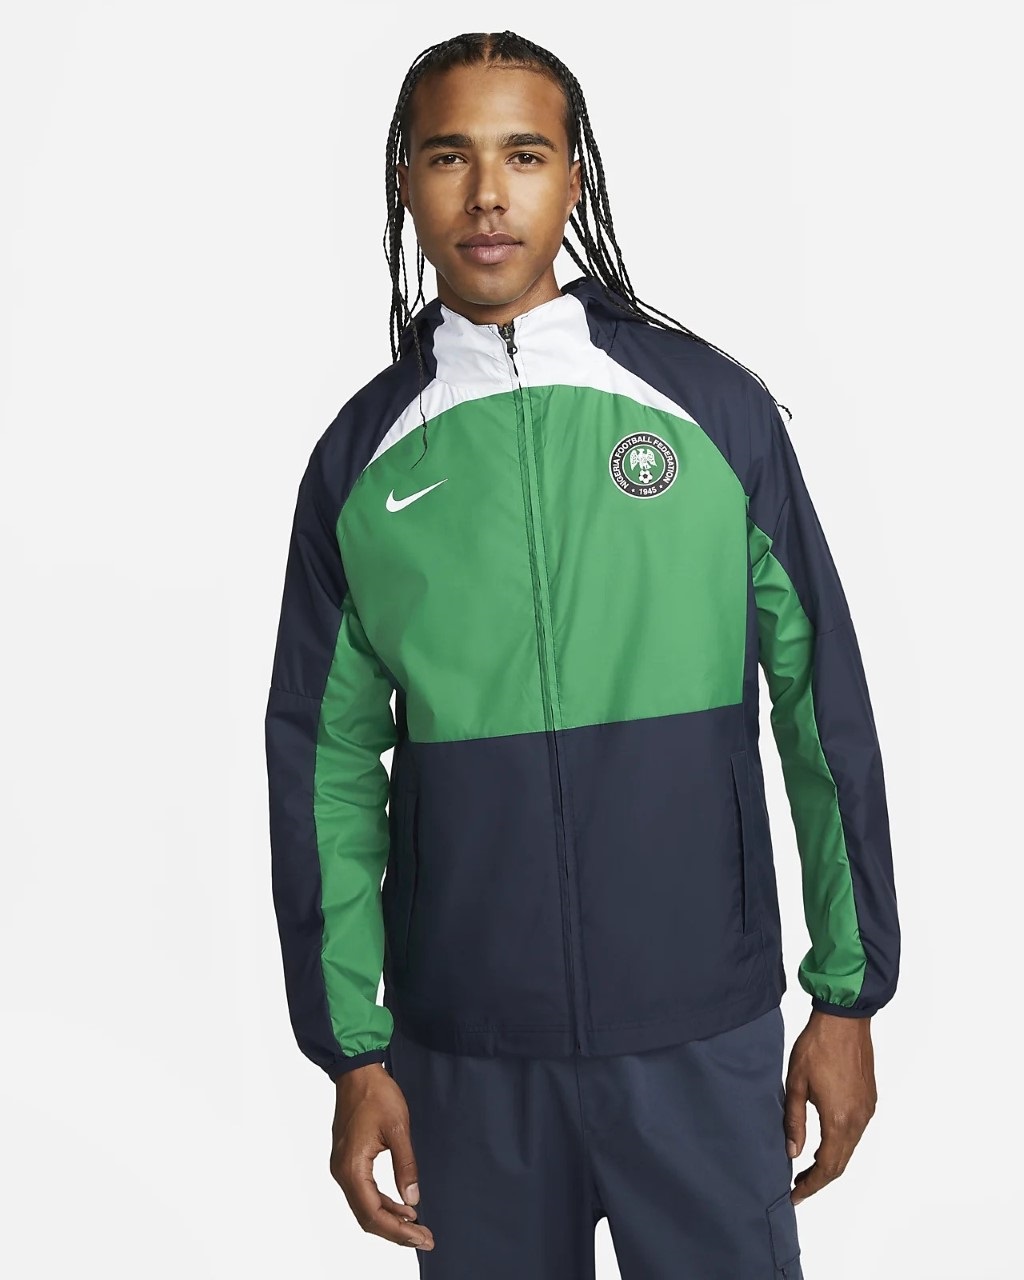 Nigeria AWF Jacket.